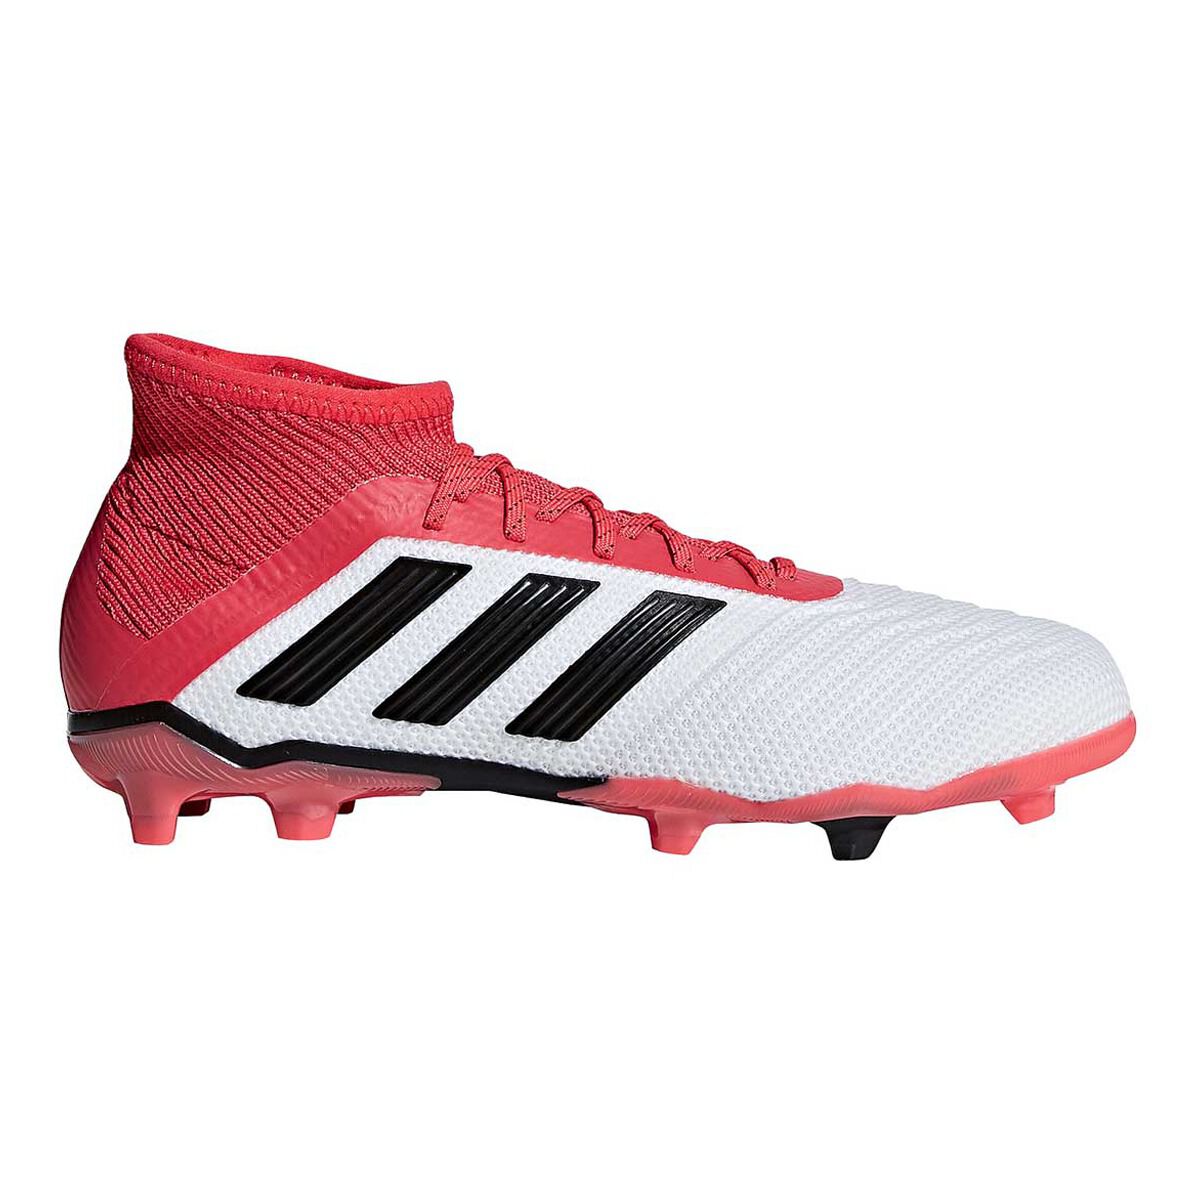 adidas predator 18.1 fg football boots